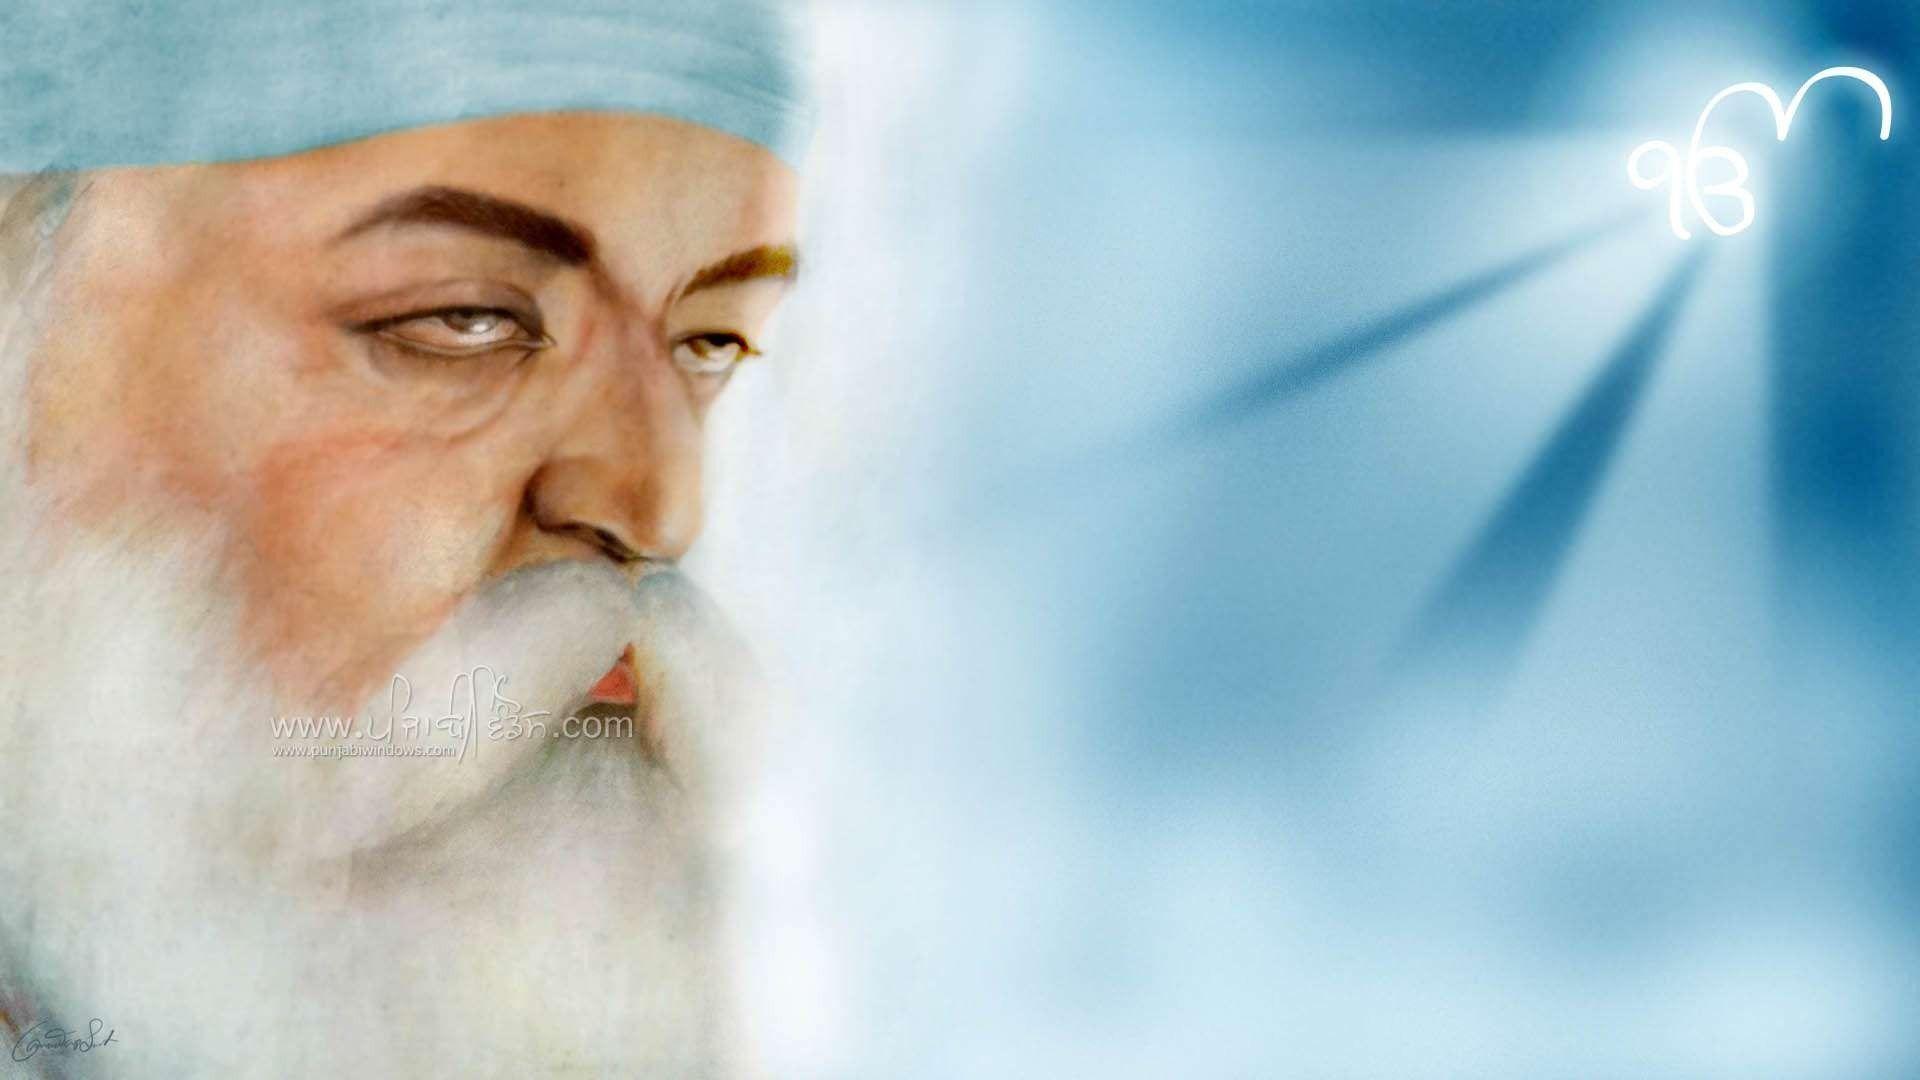 Sikh Religious Beautiful Wallpaper Full HD Widescreen 1920x1080PX